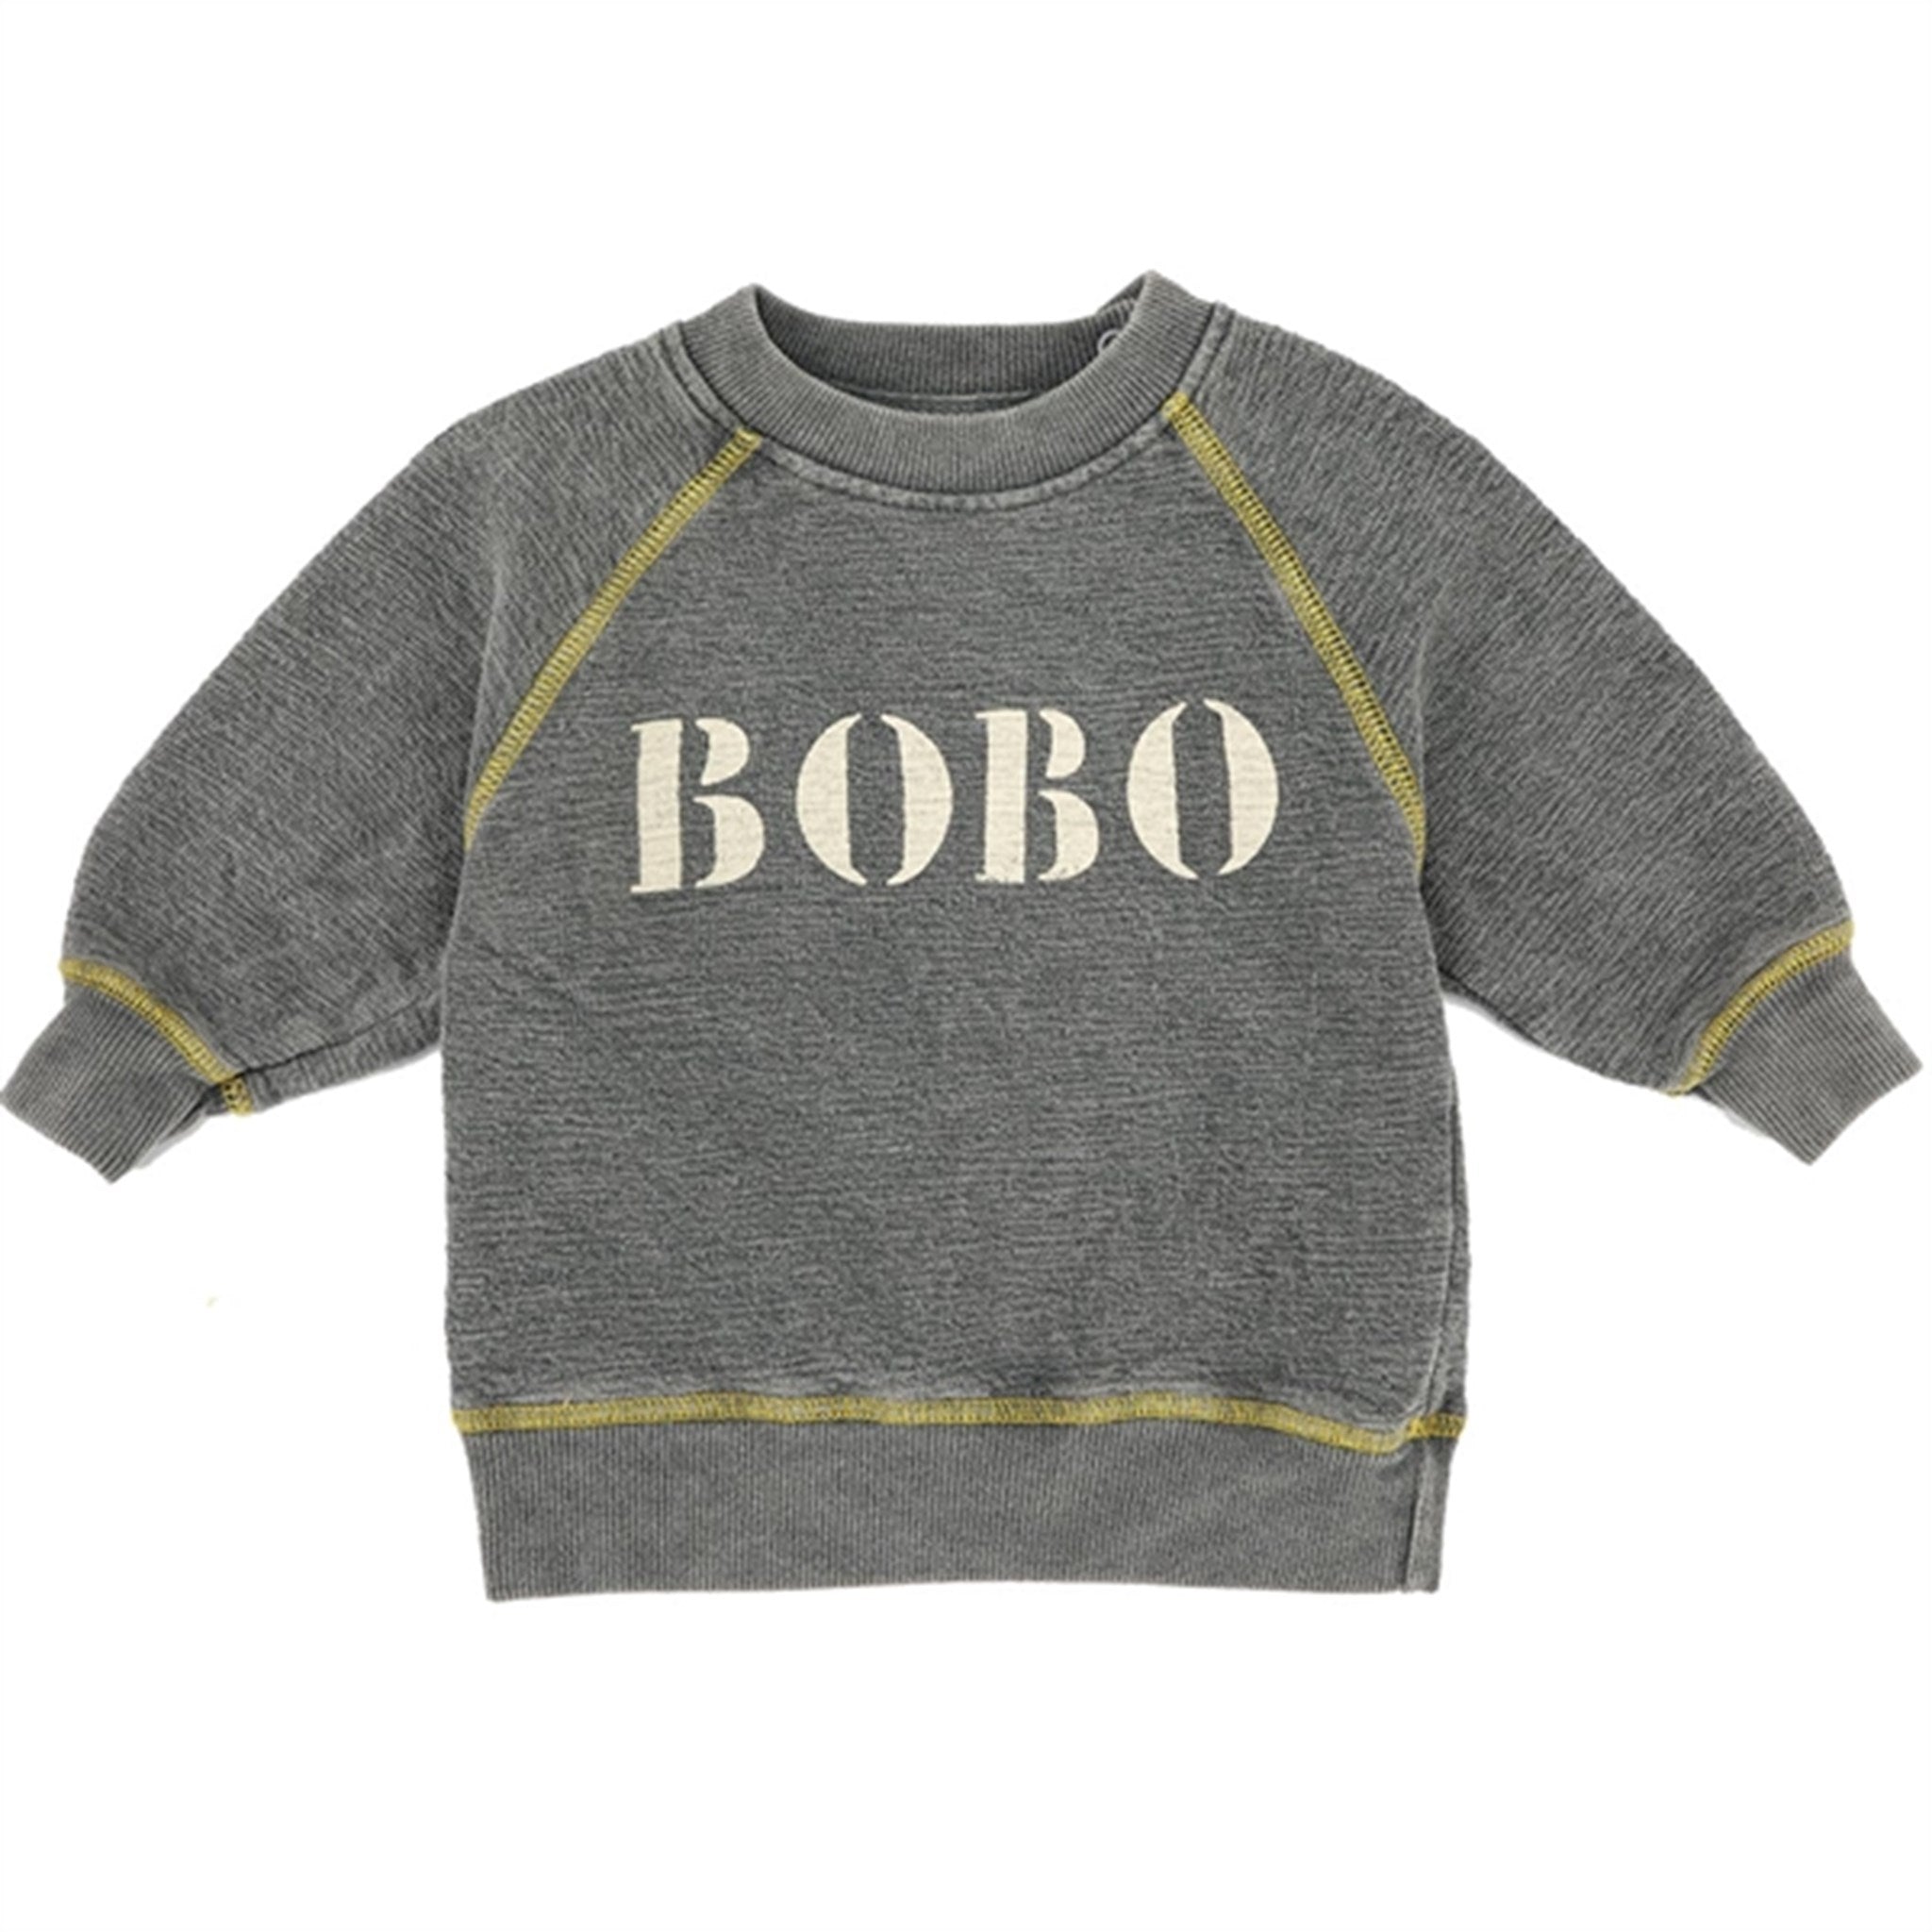 Bobo Choses Bobo Ranglan Sweatshirt